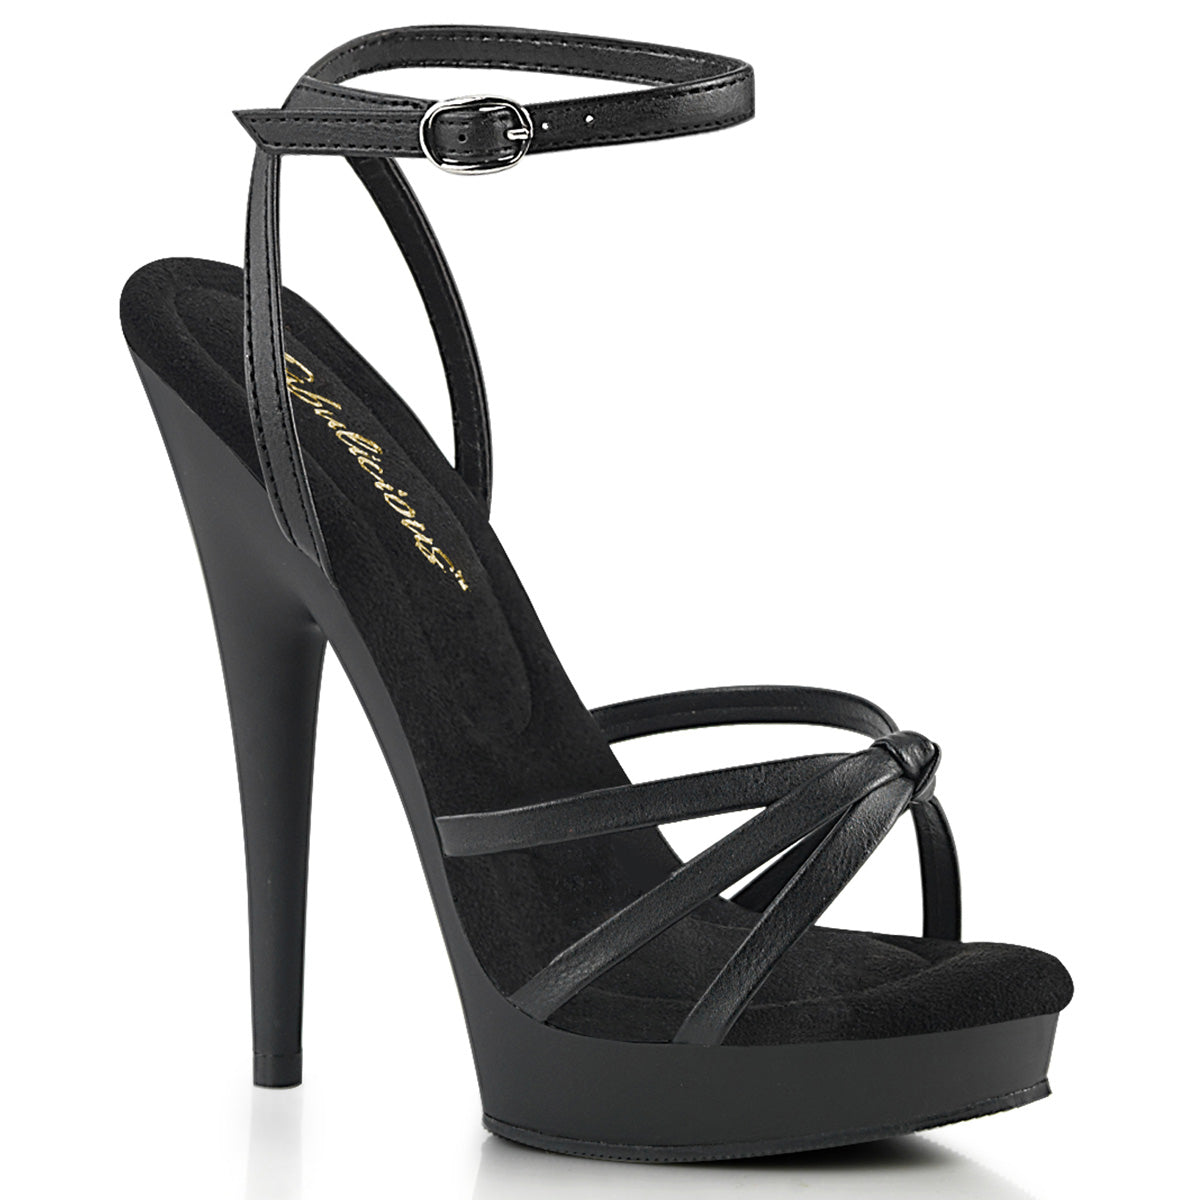 LIP-125 Fabulicious 5 Inch Heel Black Patent Sexy Shoes – Pole Dancing  Shoes - KLS Supplies Ltd